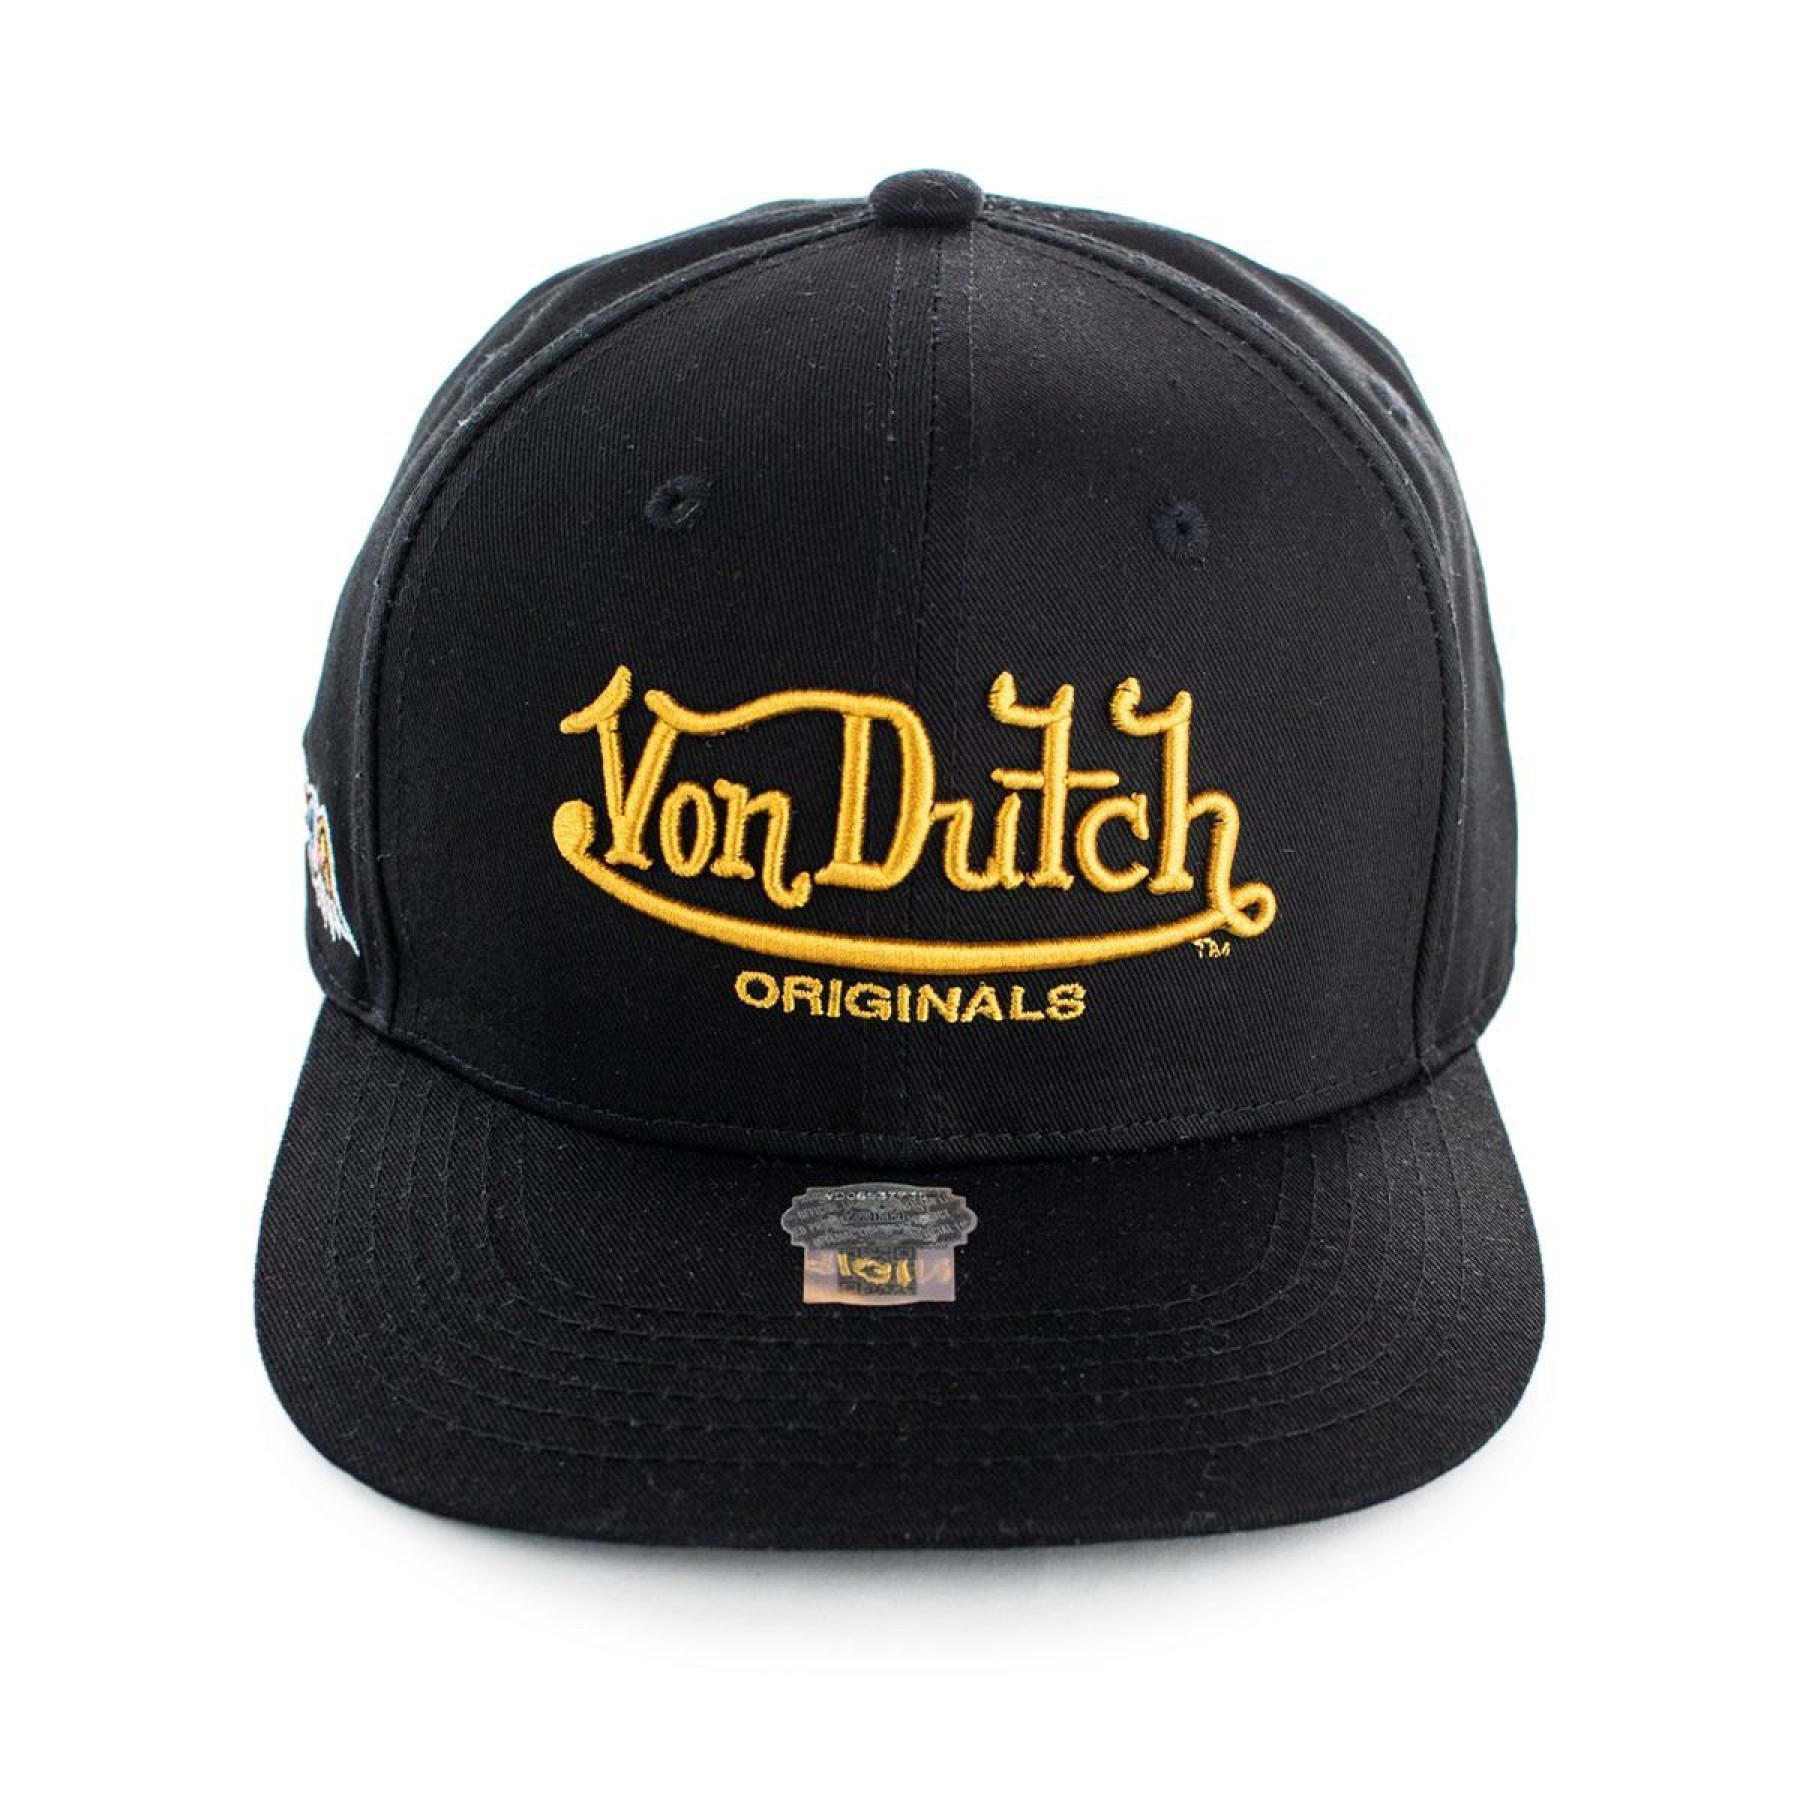 Casquette visière plate Von Dutch logo